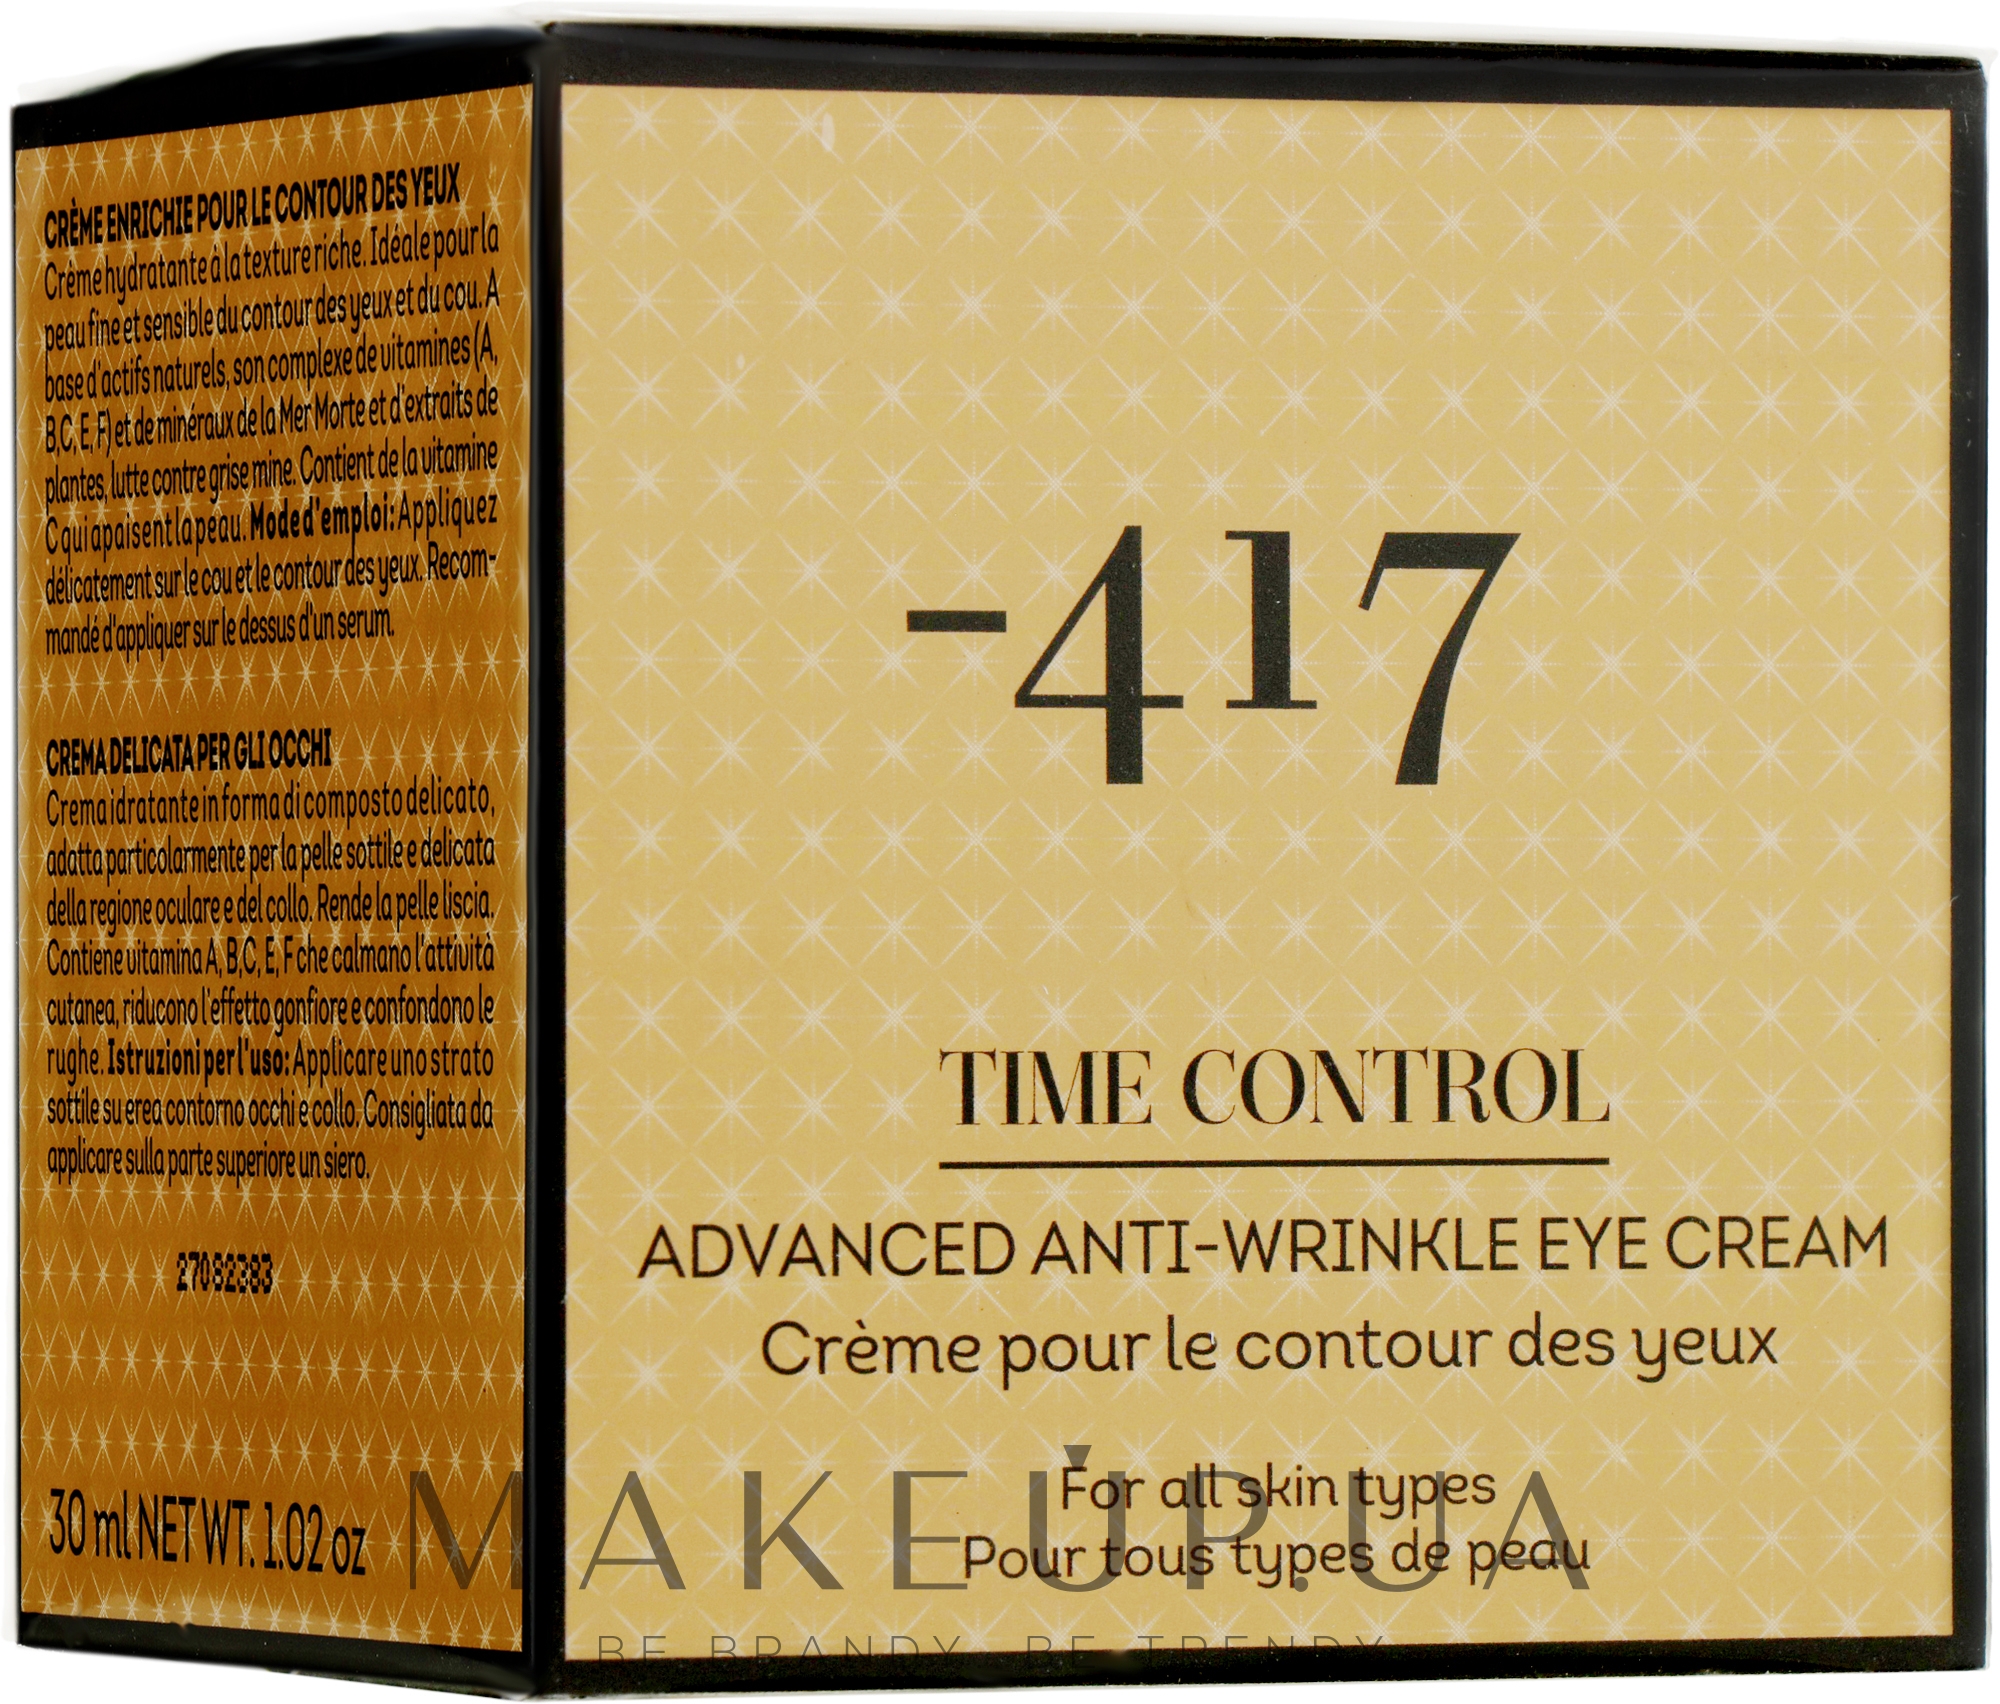 Збагачений крем для контуру очей "Контроль над старінням" - -417 Time Control Collection Rich Eye Cream — фото 30ml